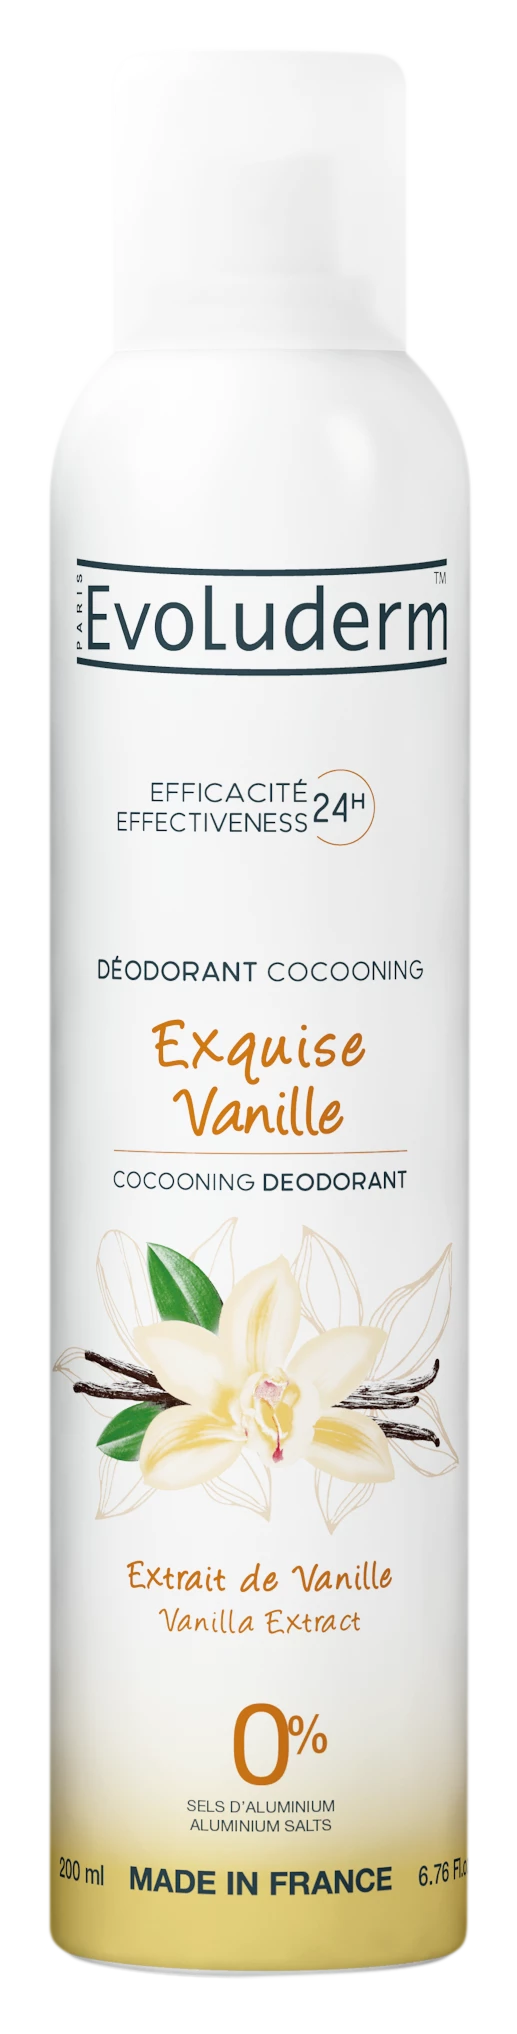 Exquisites Vanille-Deodorant, Vanilleextrakt, 200 ml - EVOLUDERM